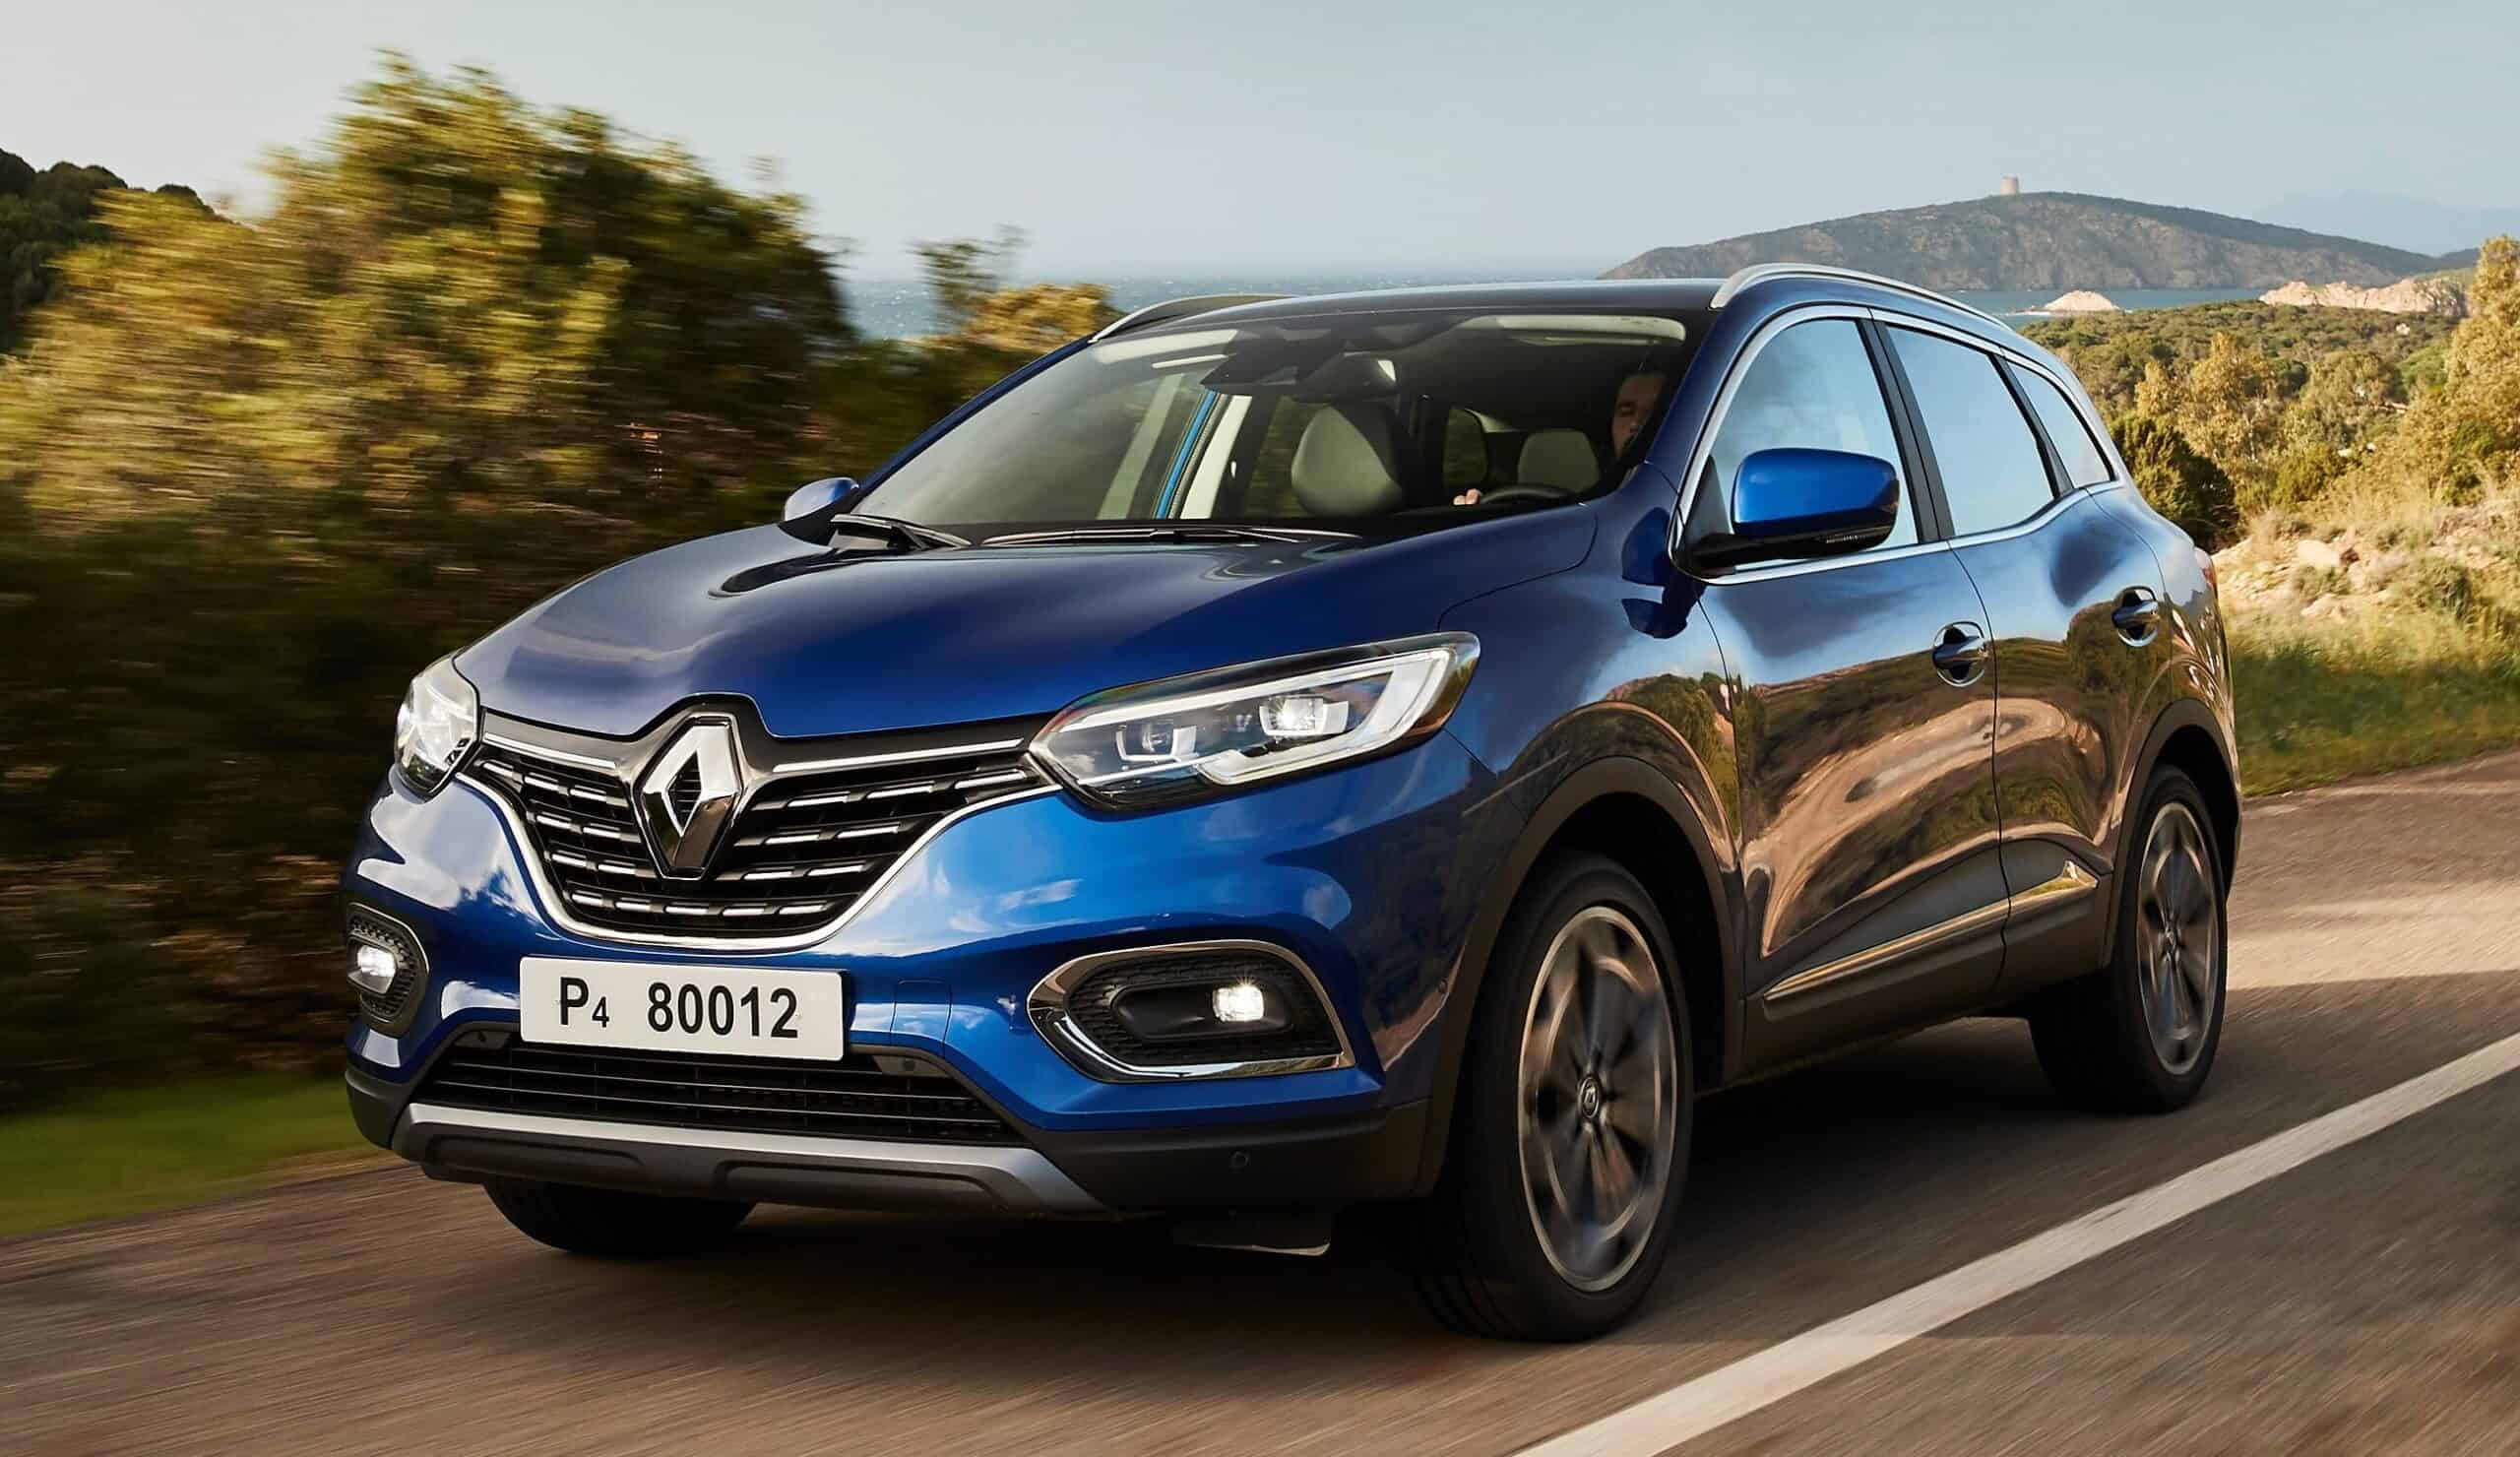 Renault Kadjar: A symbol of elegance and versatility against a scenic backdrop.